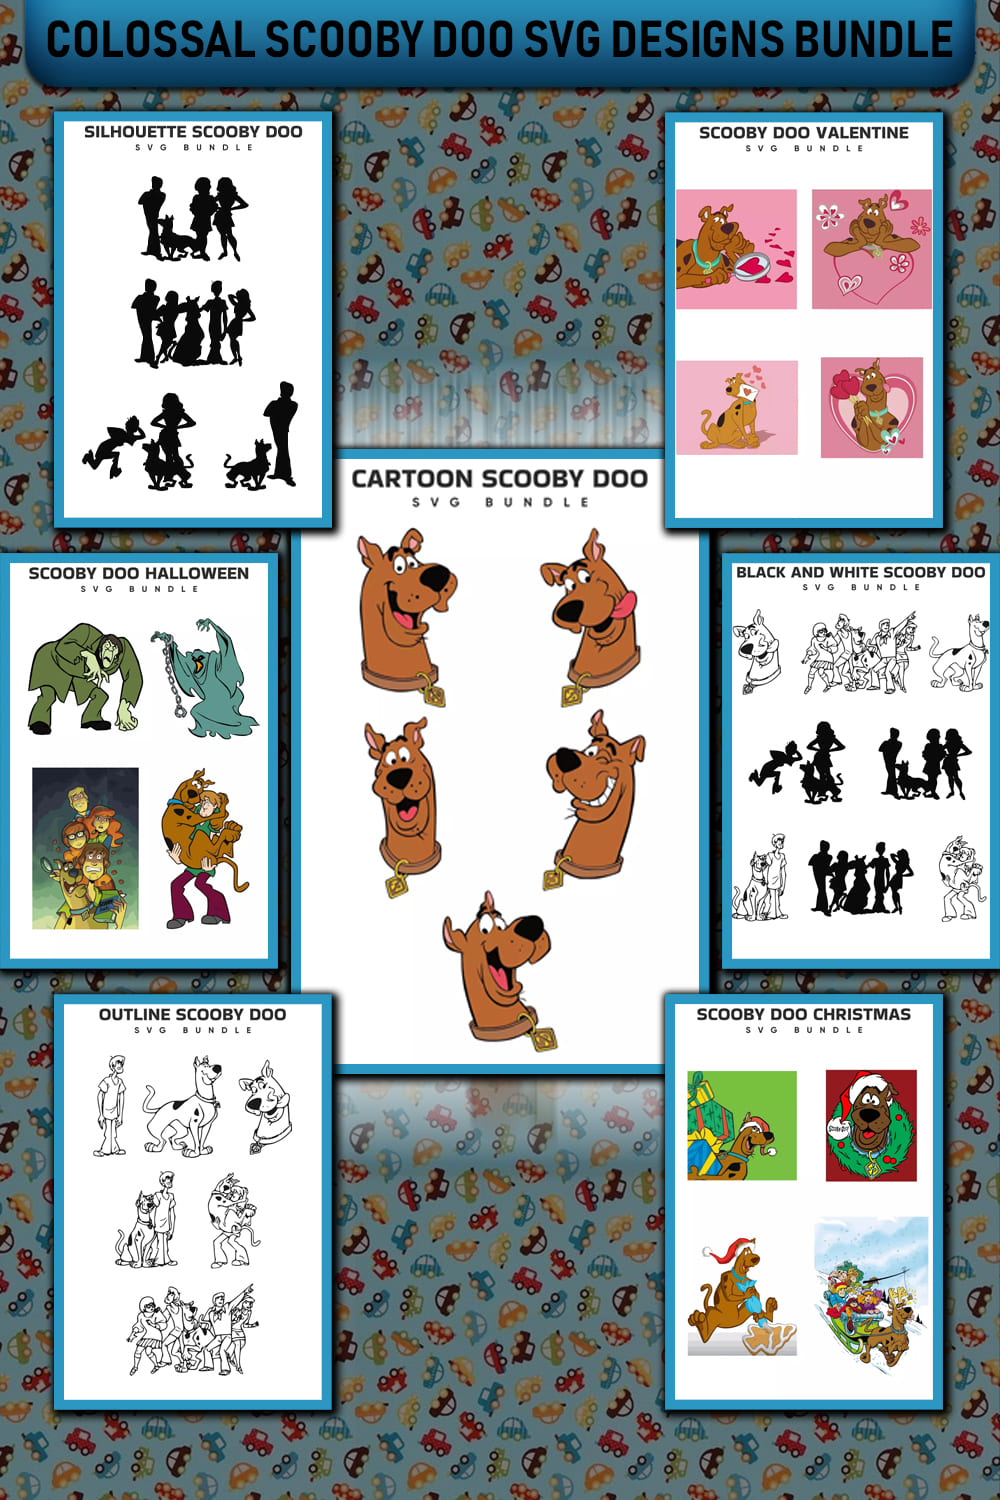 Colossal Scooby Doo SVG Designs Bundle Pinterest.